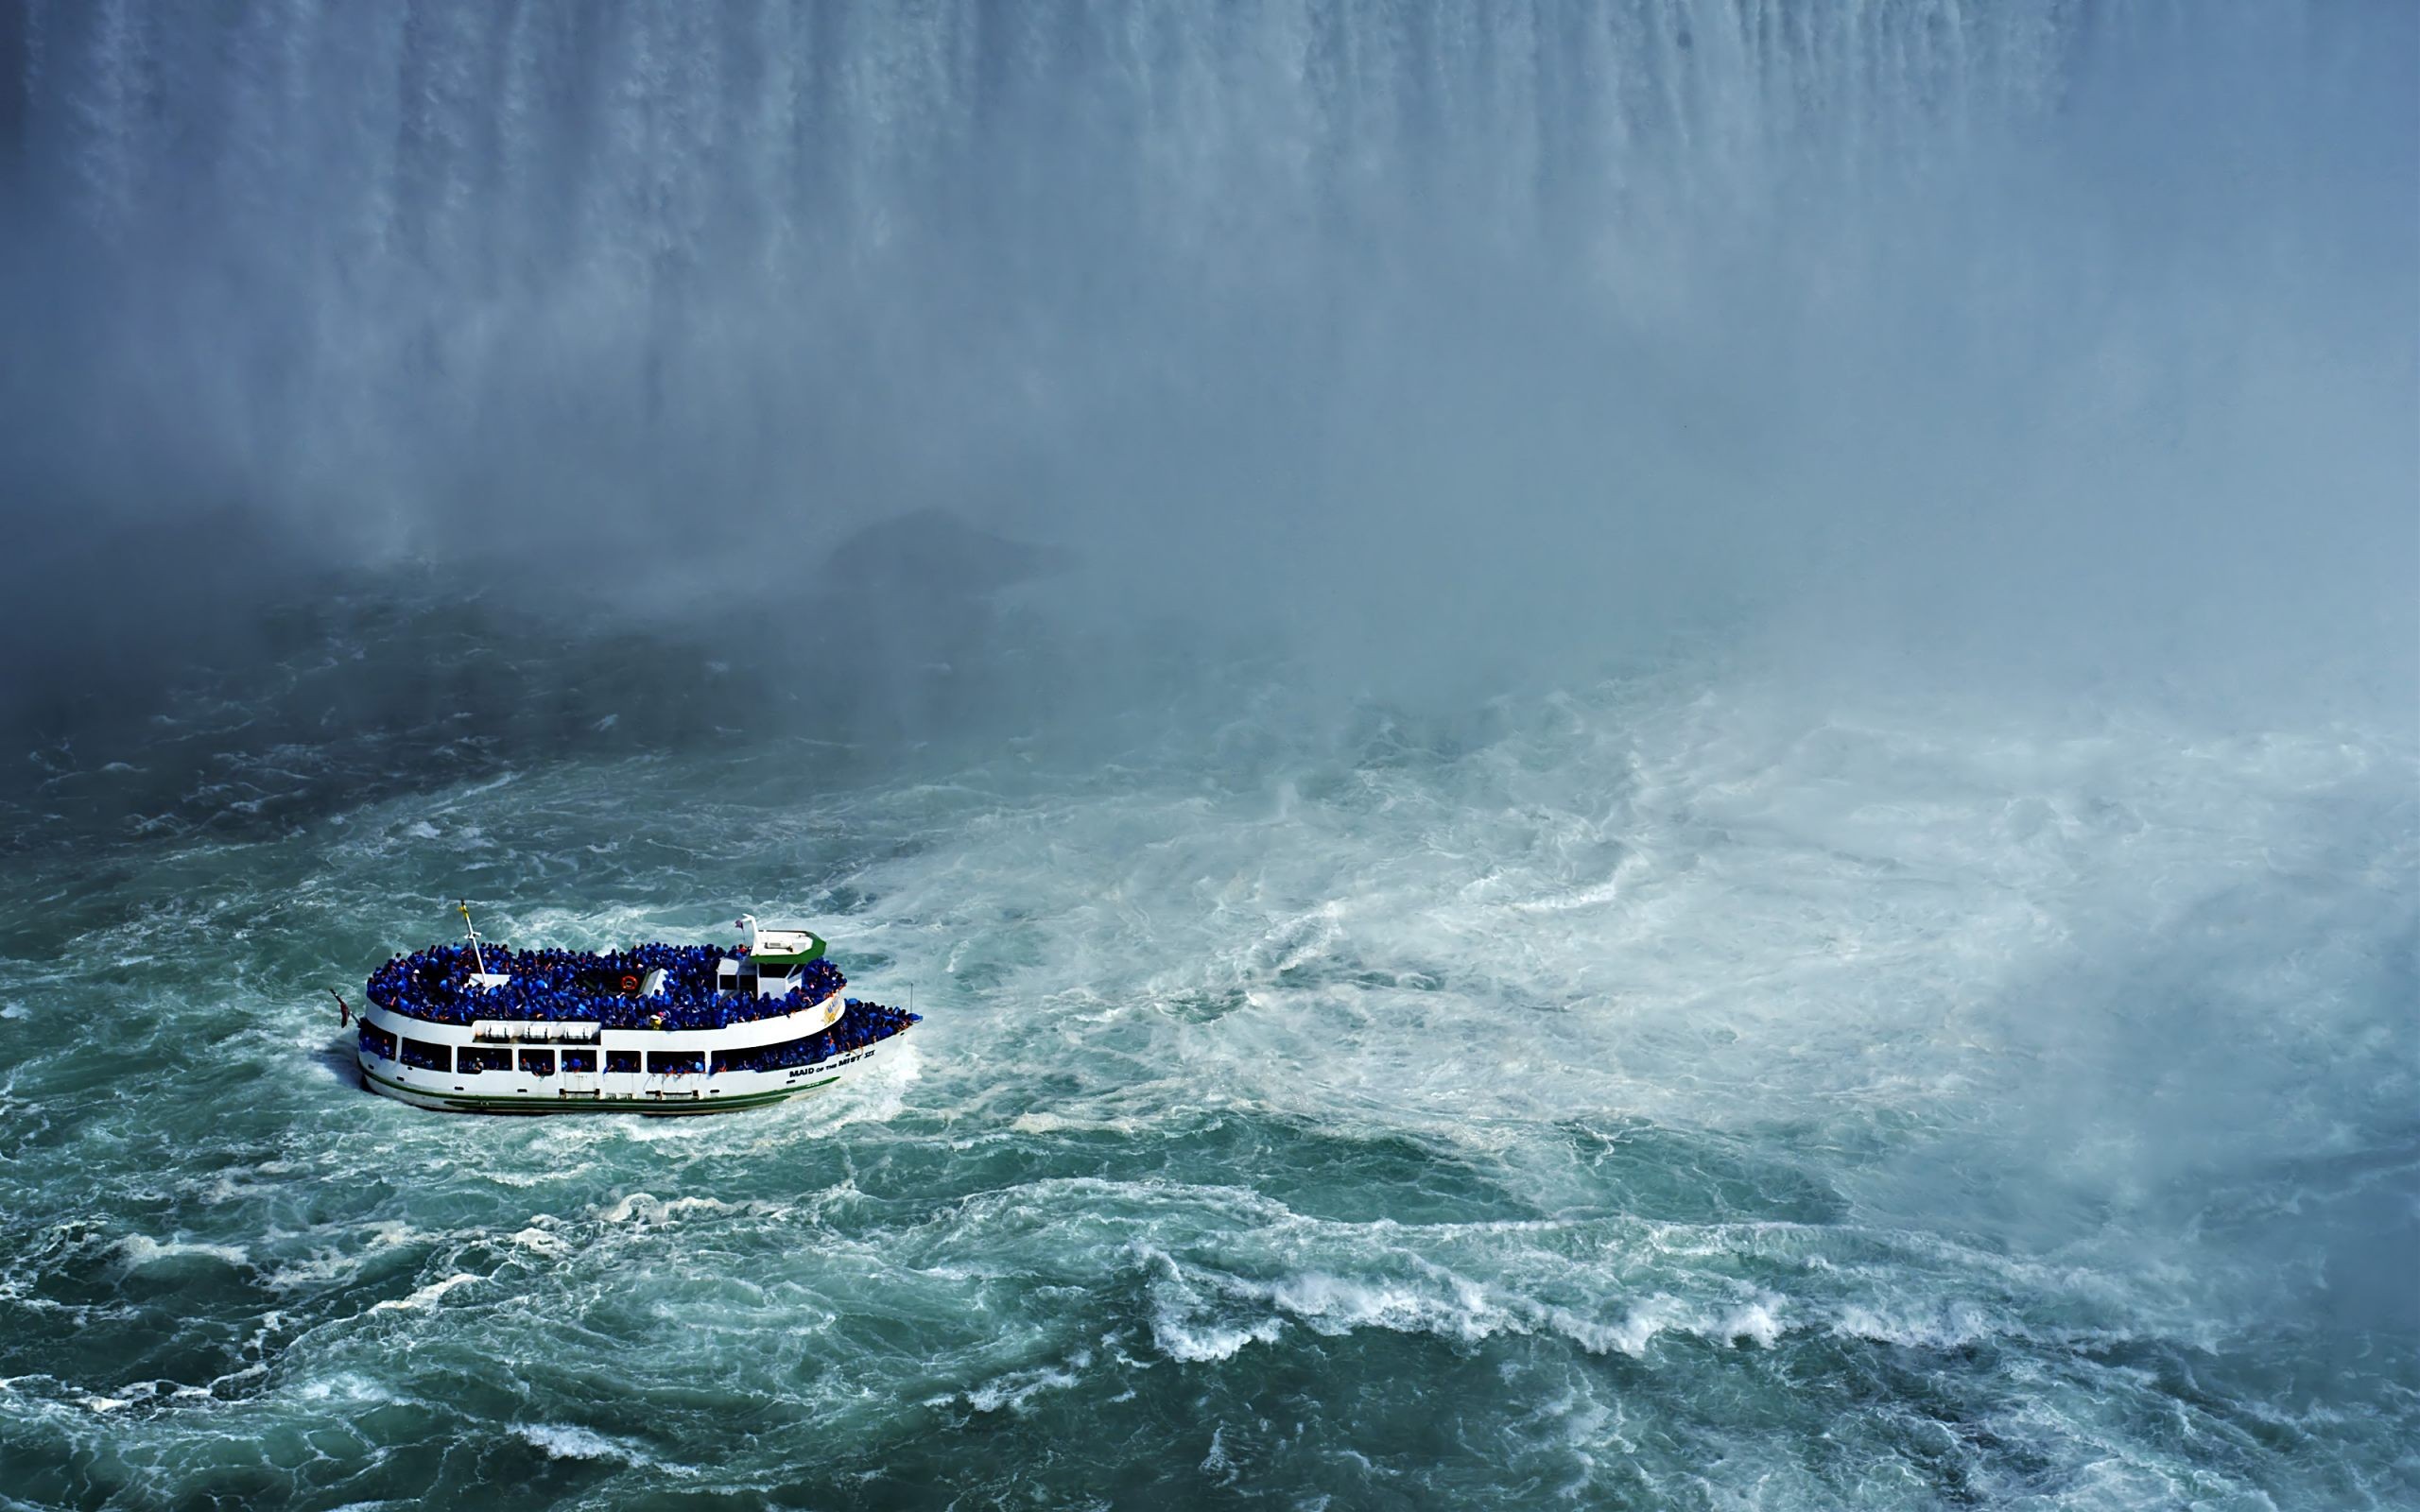 General 2560x1600 Niagara Falls boat waterfall waves people ship vehicle